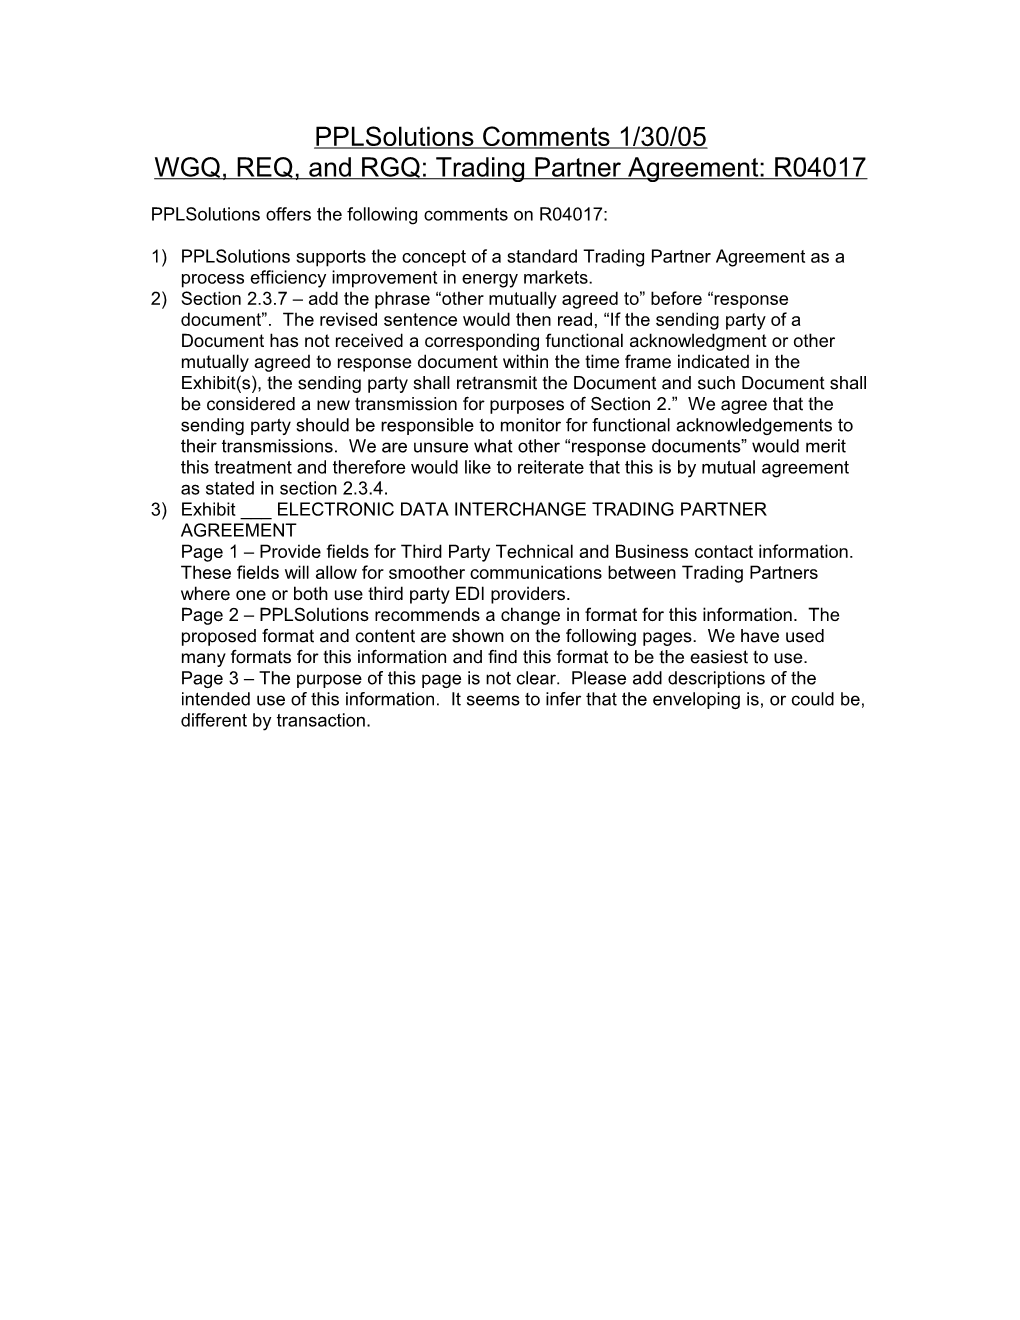 WGQ, REQ, and RGQ: Trading Partner Agreement: R04017